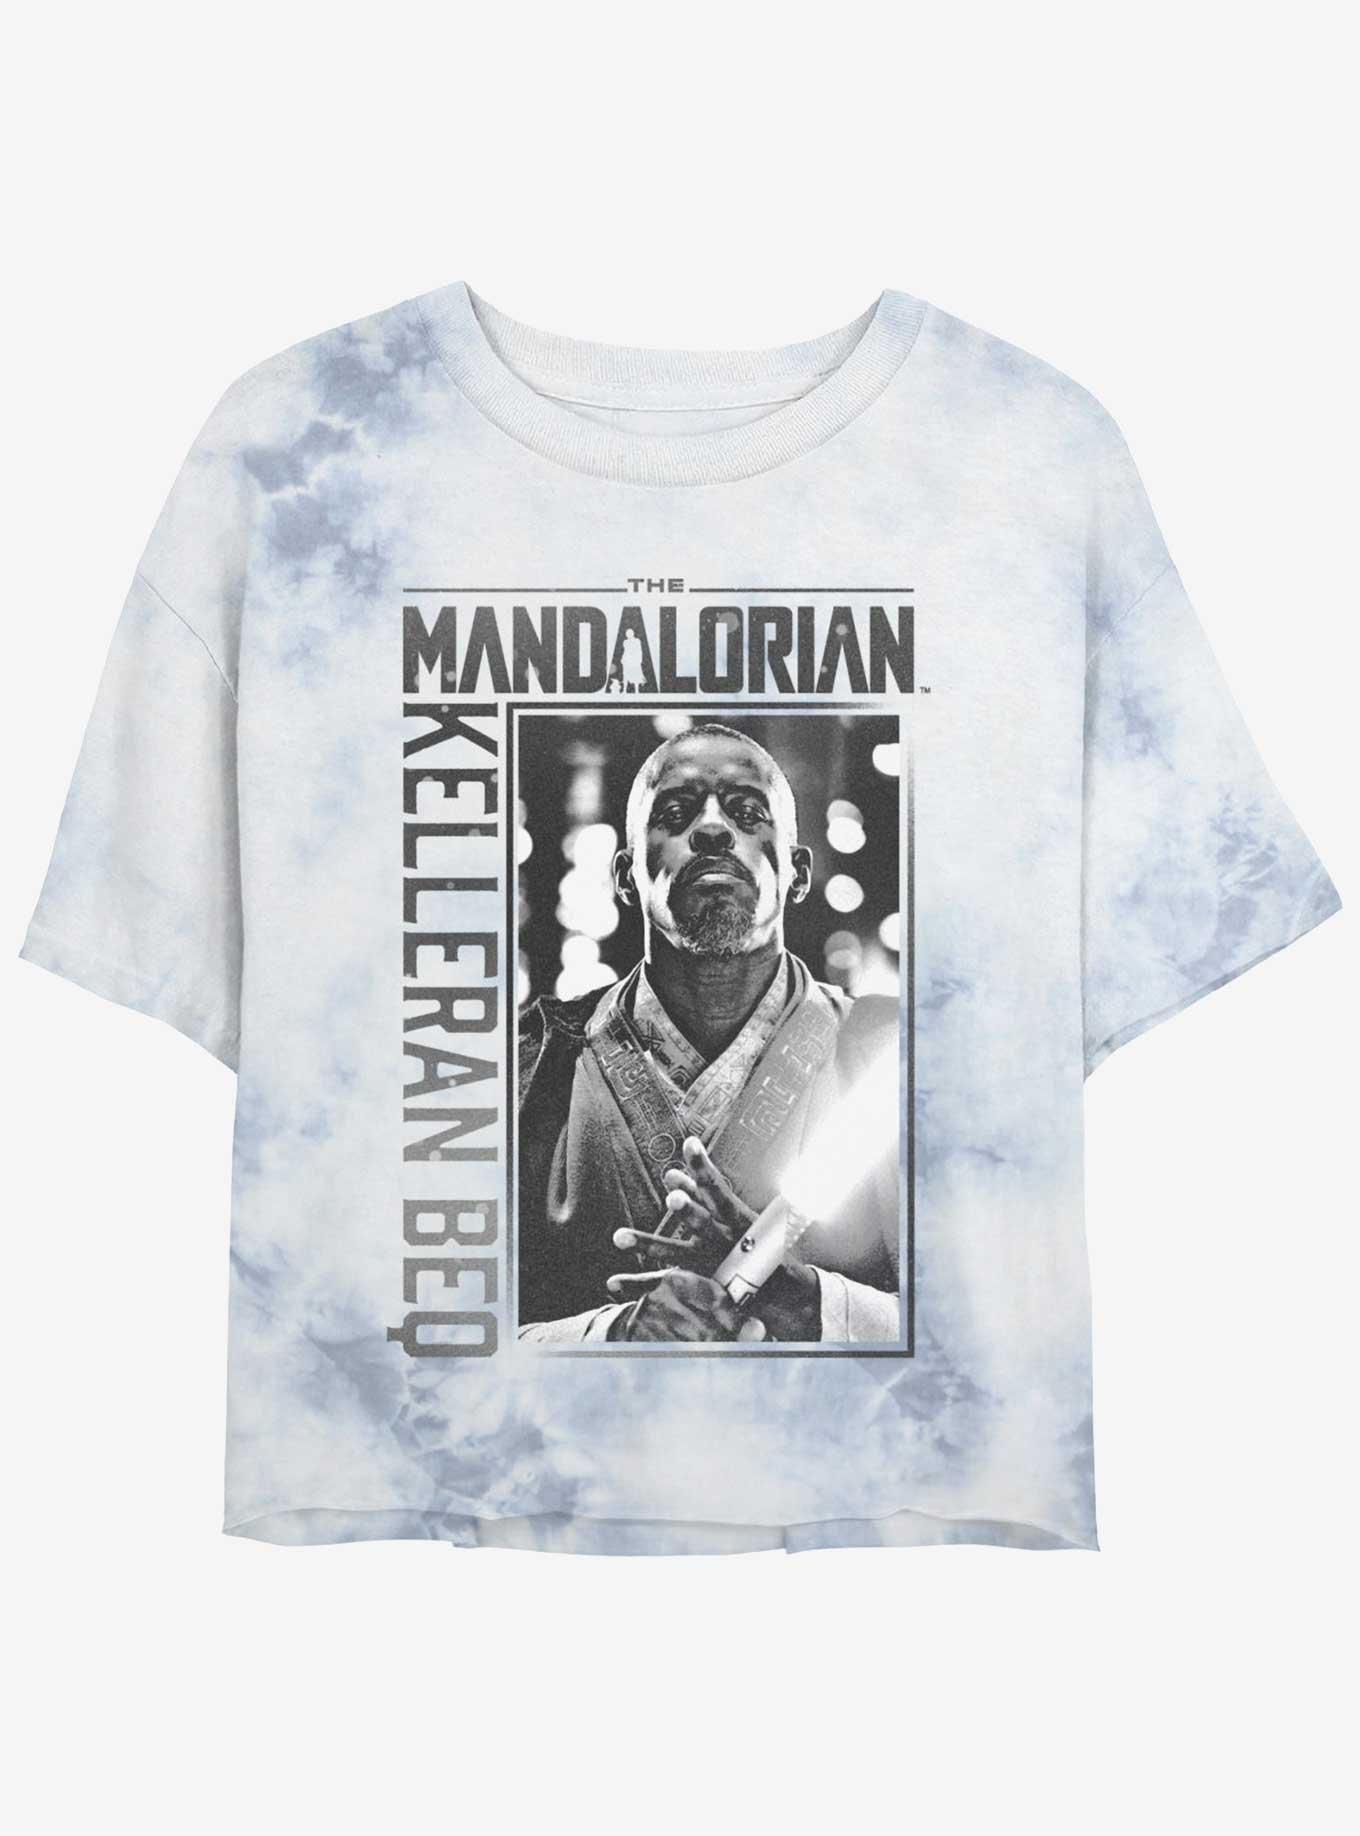 Star Wars The Mandalorian Kelleran Beq Poster Tie-Dye Girls Crop T-Shirt, , hi-res